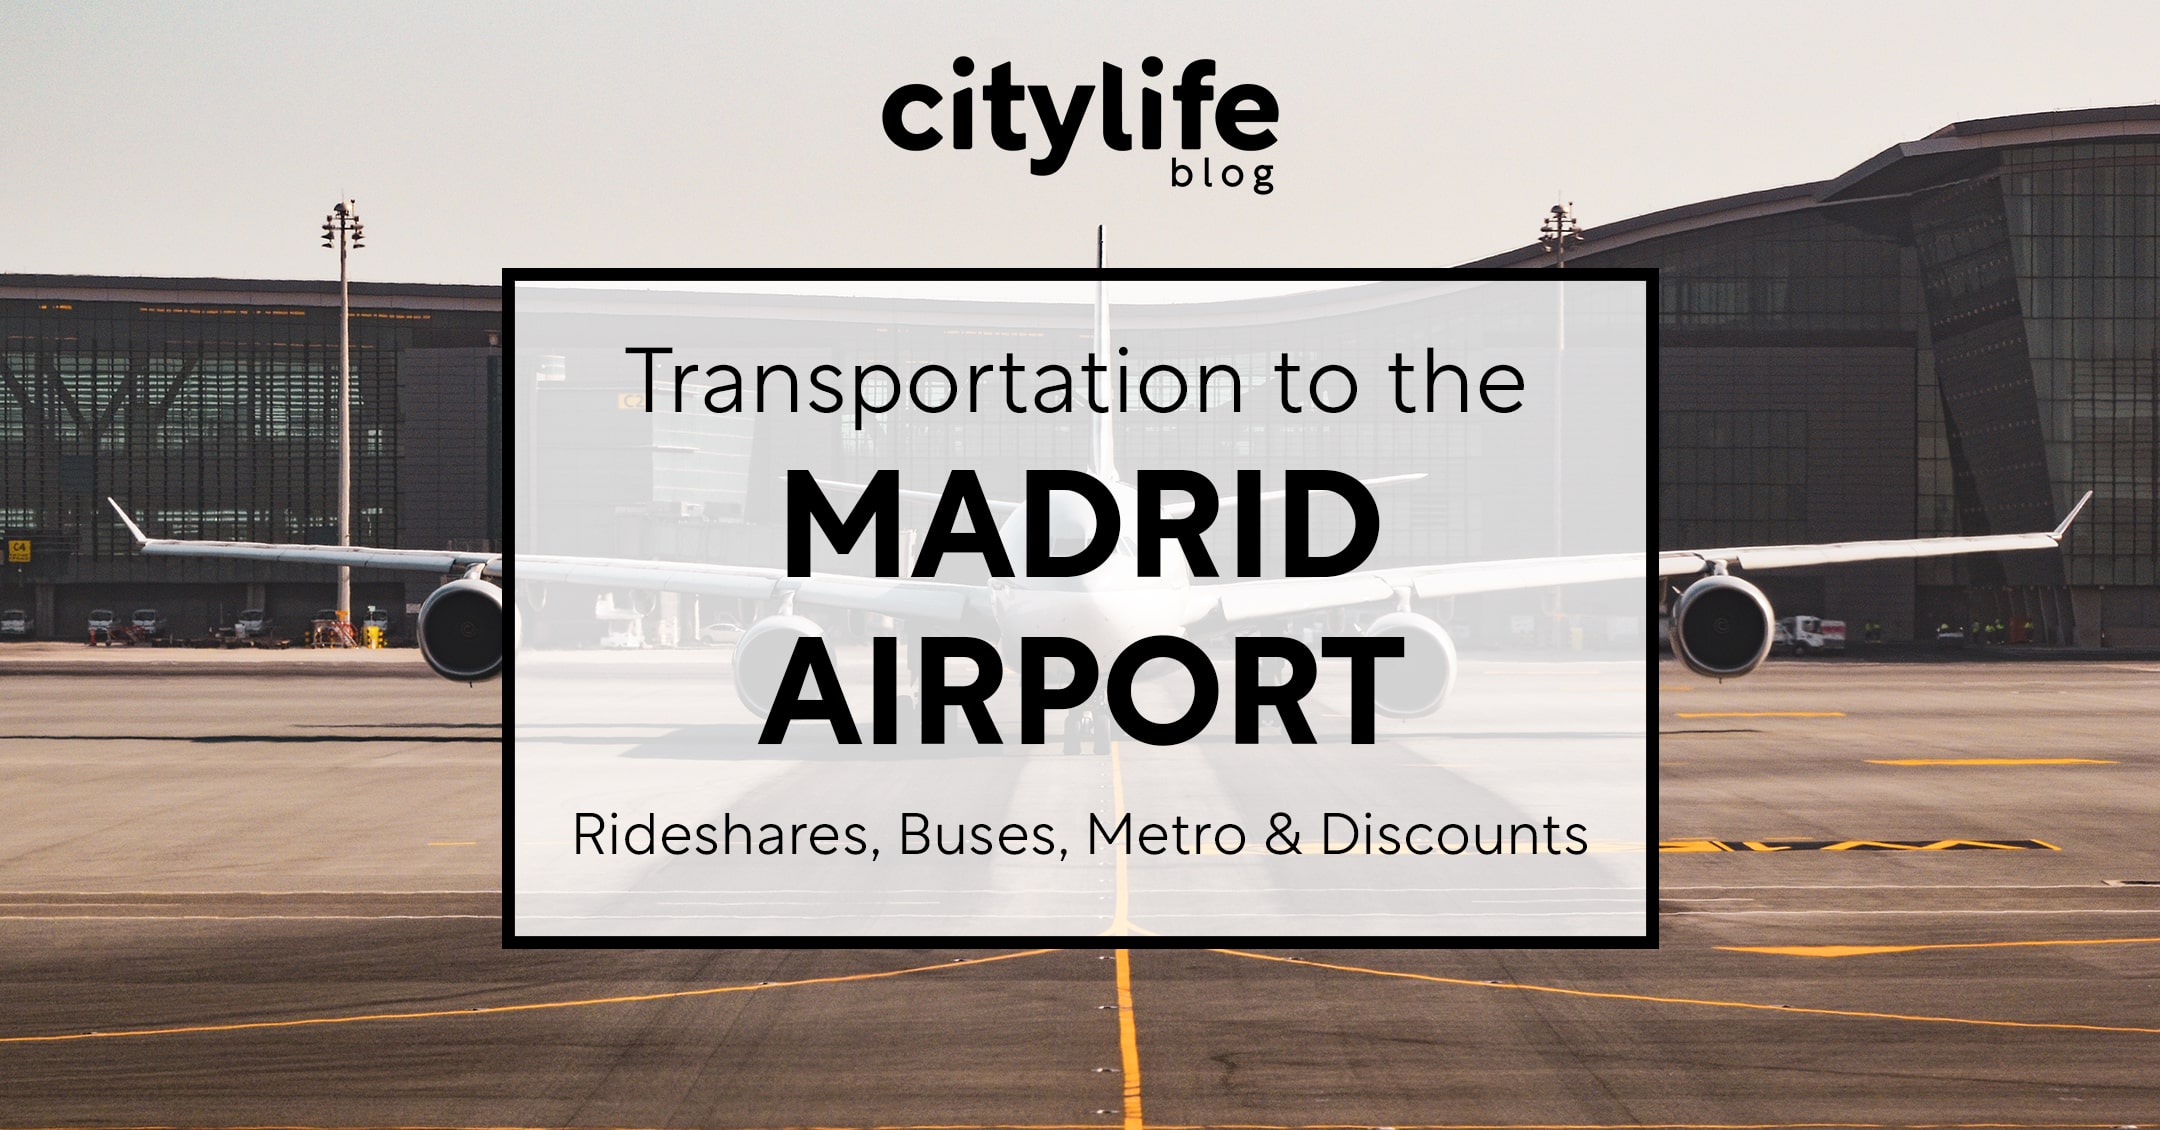 featured-image-madrid-airport-transport-metro-discounts-citylife-madrid